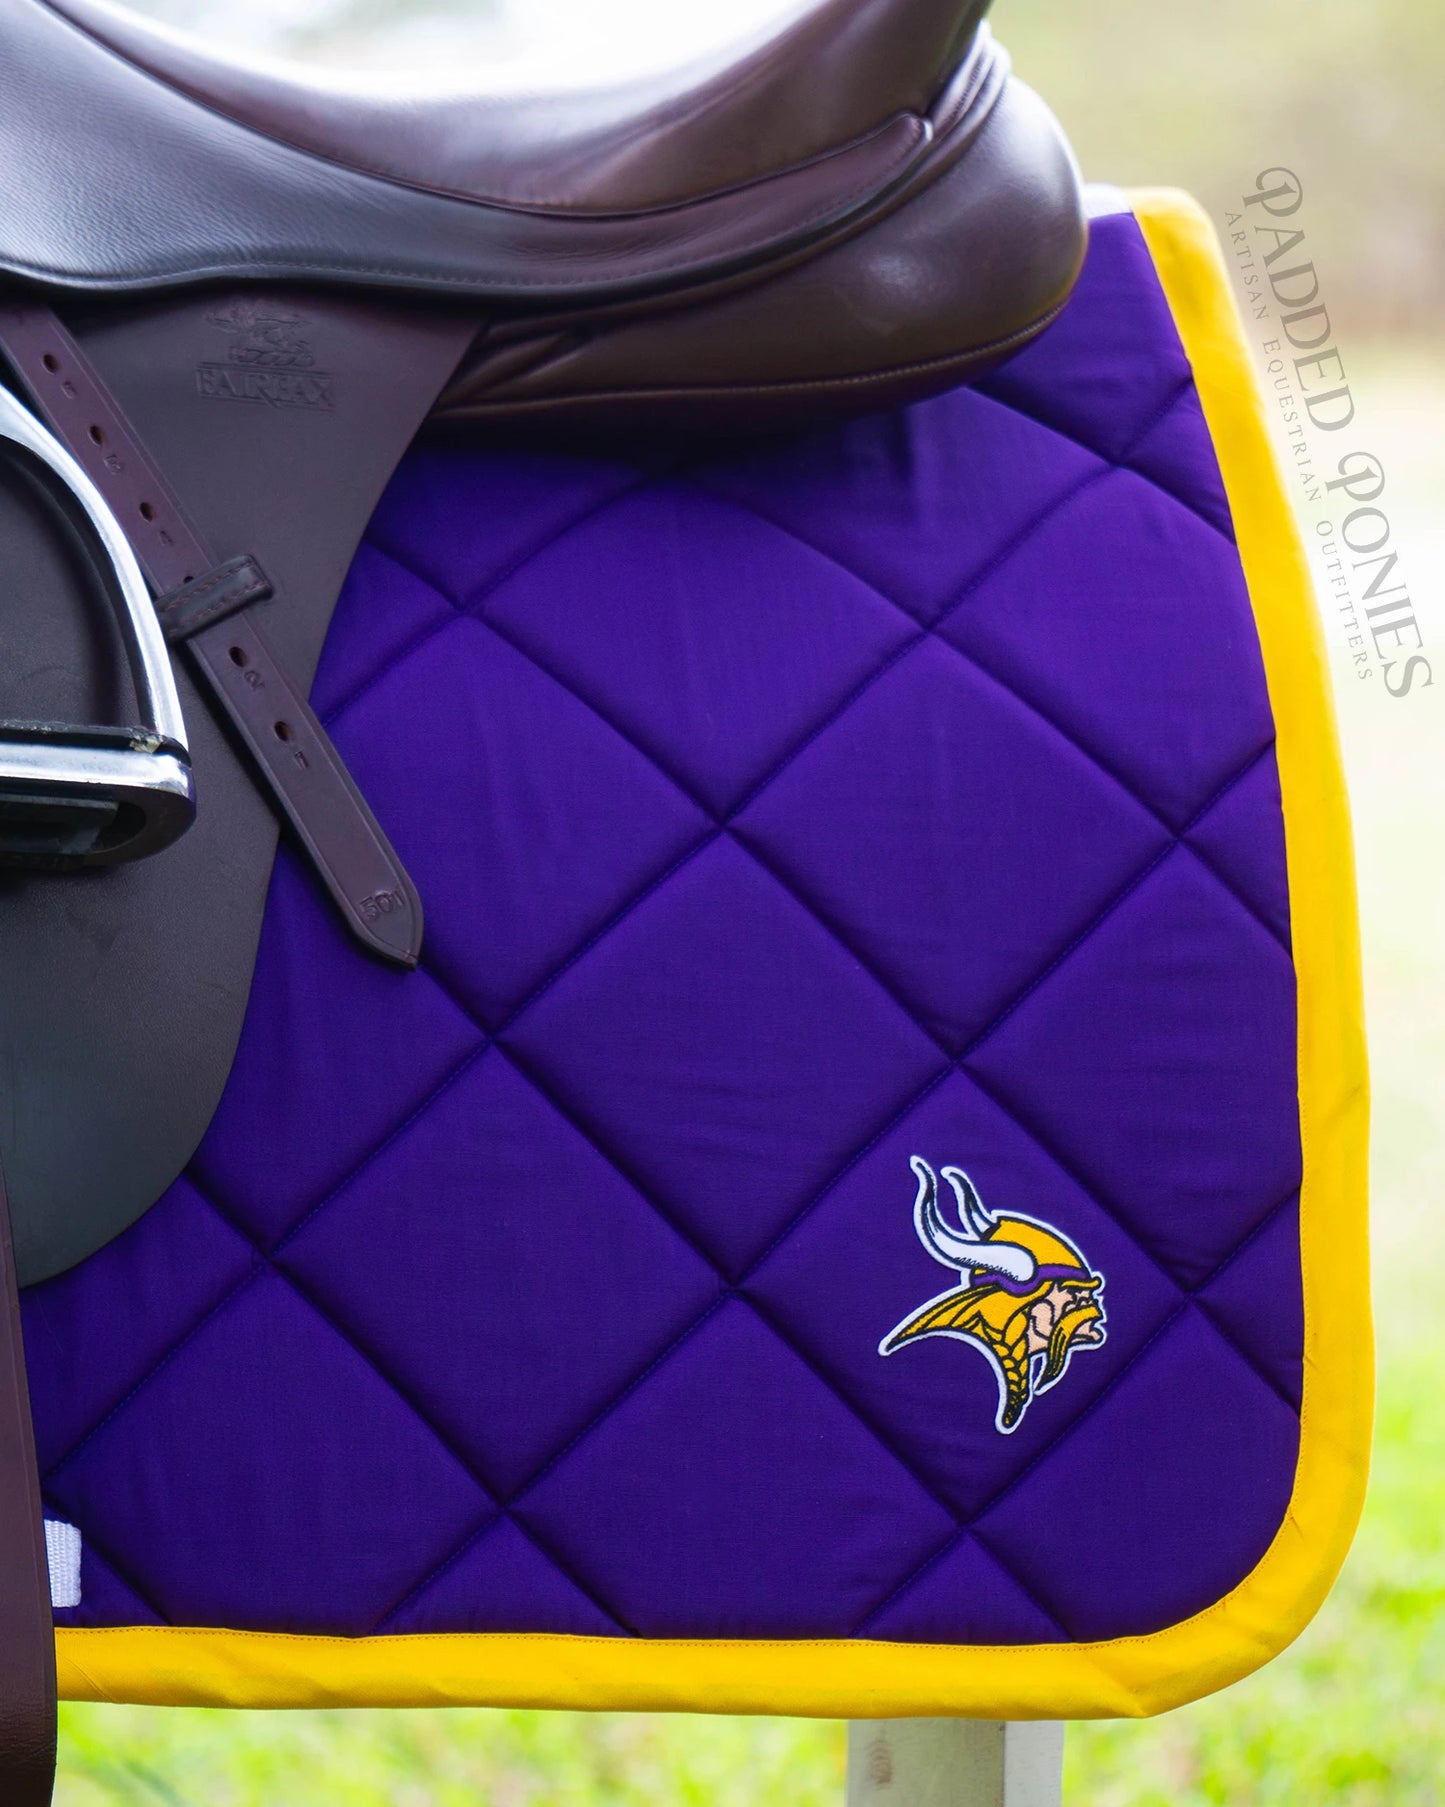 Minnesota Vikings NFL Football Patch Purple and Yellow All Purpose Saddle Pad